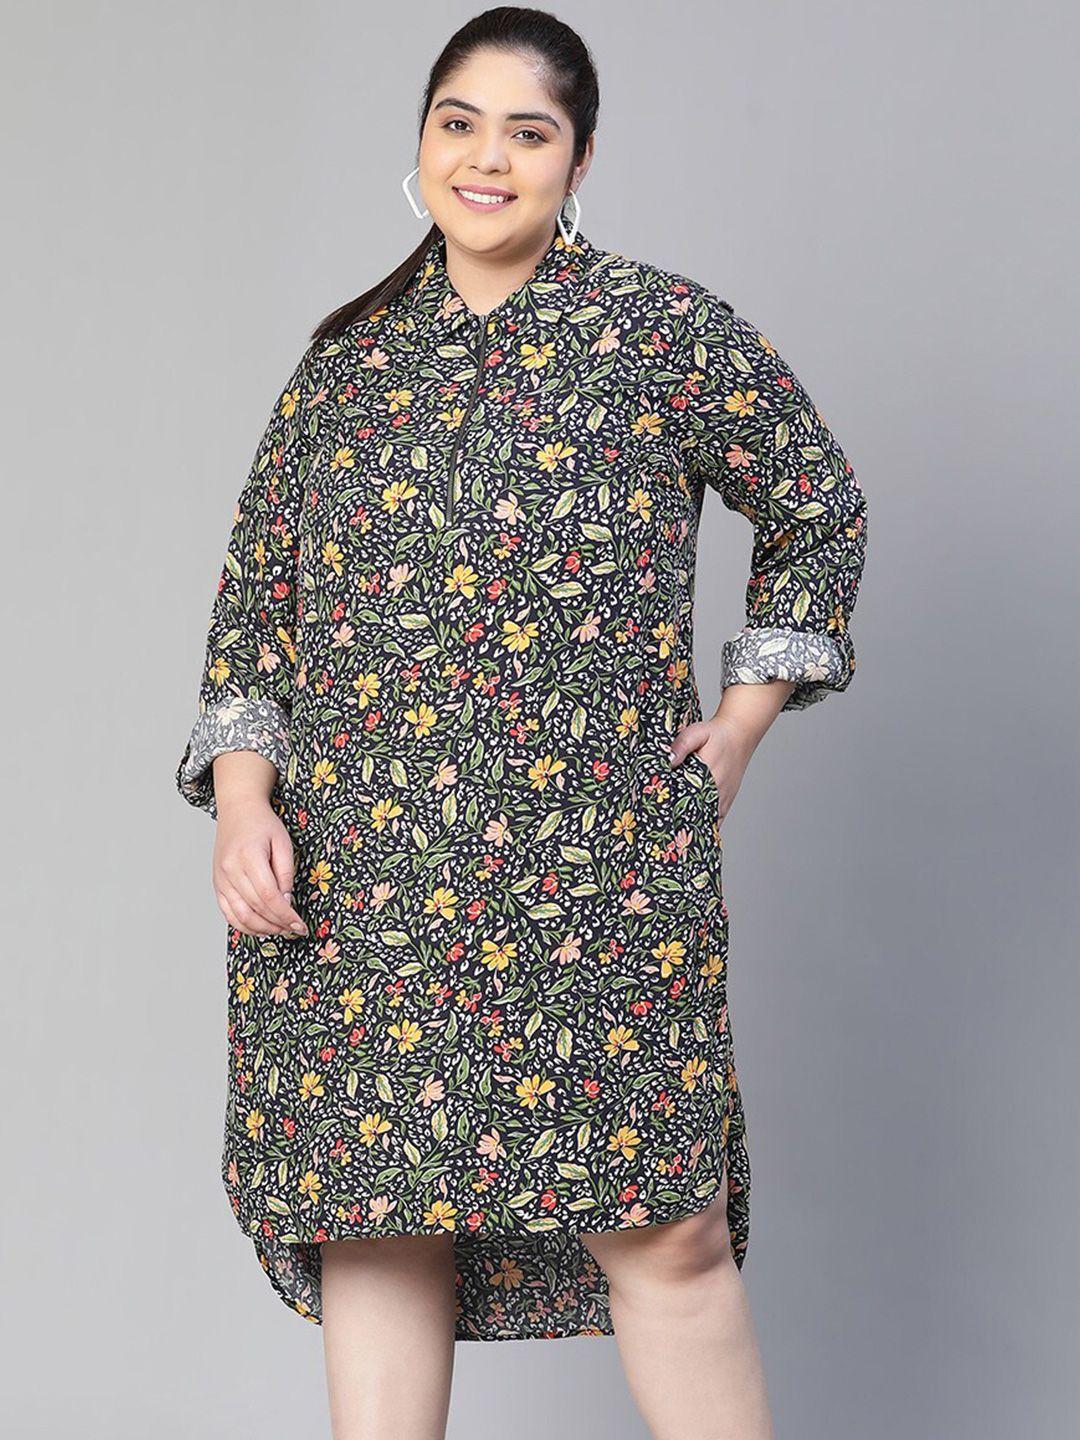 oxolloxo-plus-size-floral-printed-shirt-midi-dress